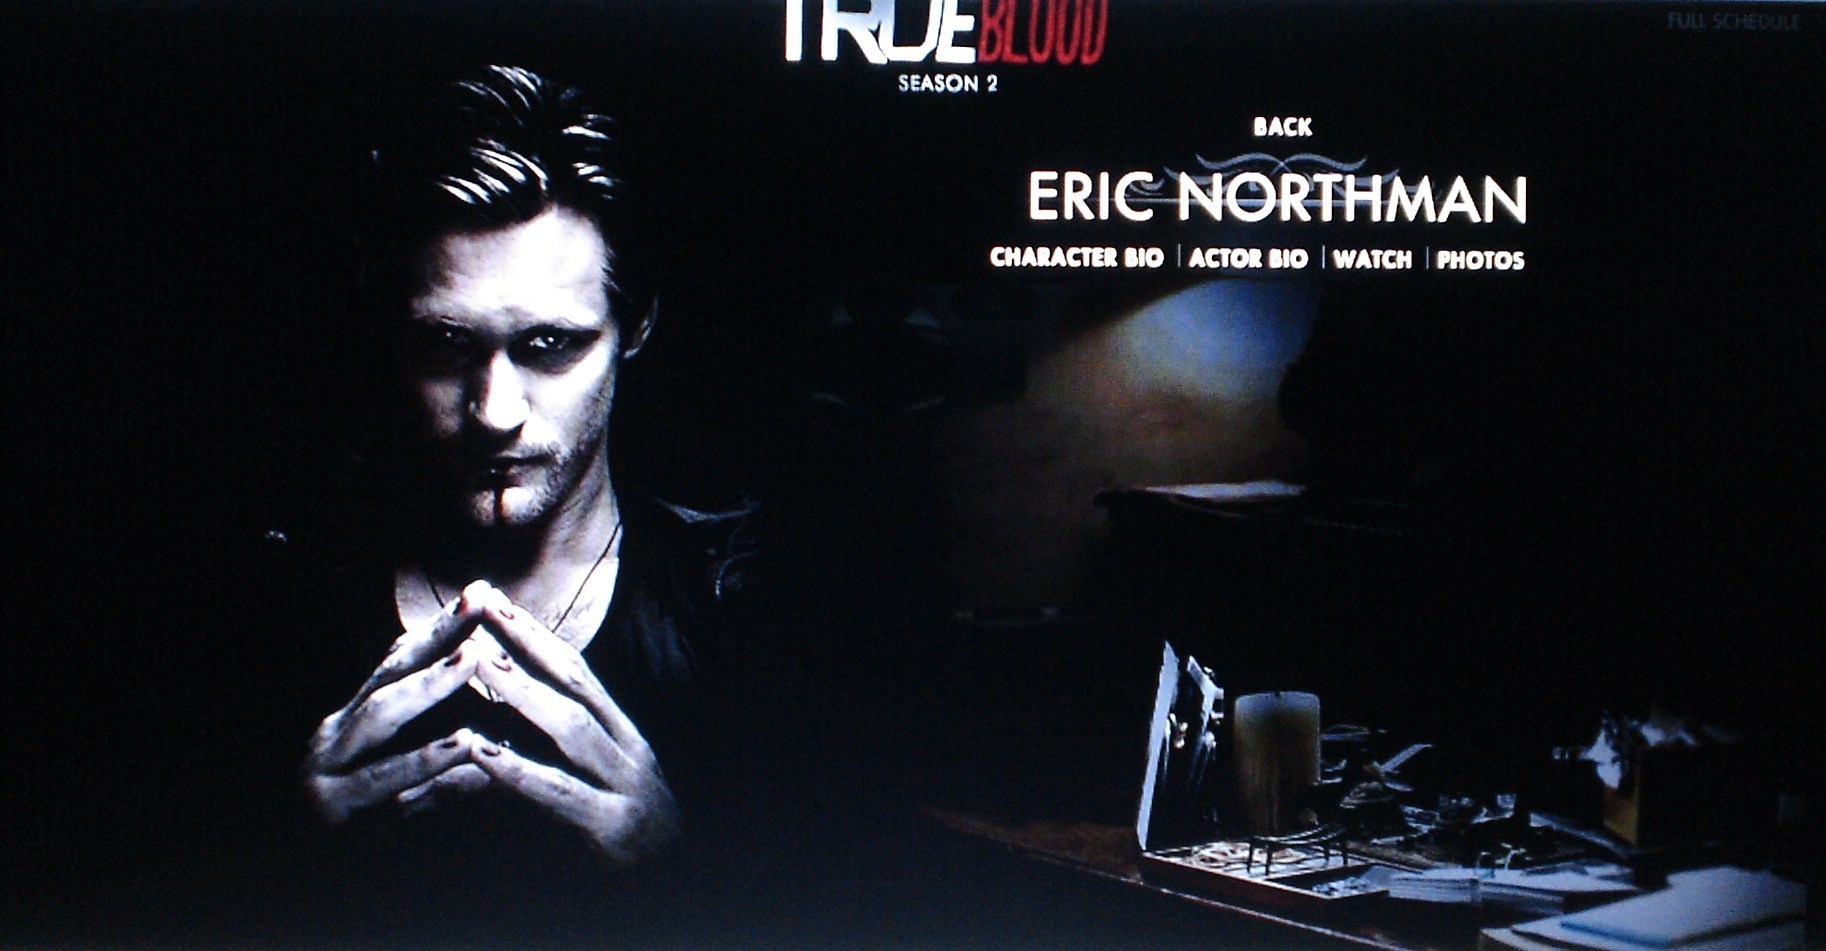 Eric Northman Image True Blood Season HD Wallpaper And